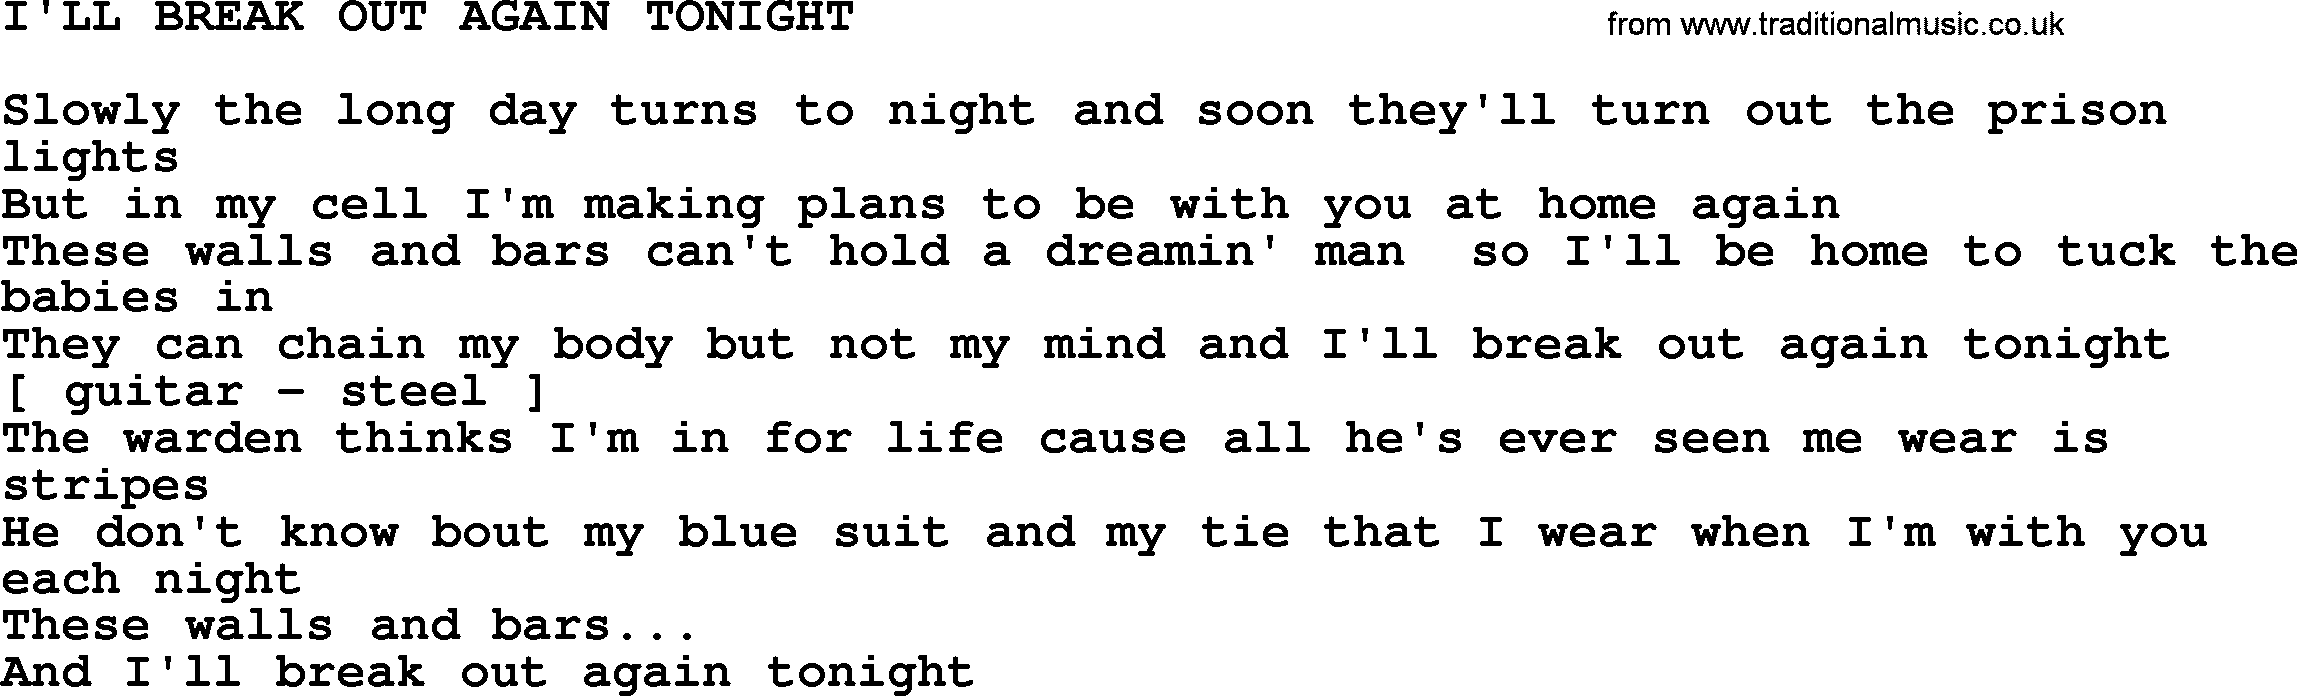 Merle Haggard song: I'll Break Out Again Tonight, lyrics.